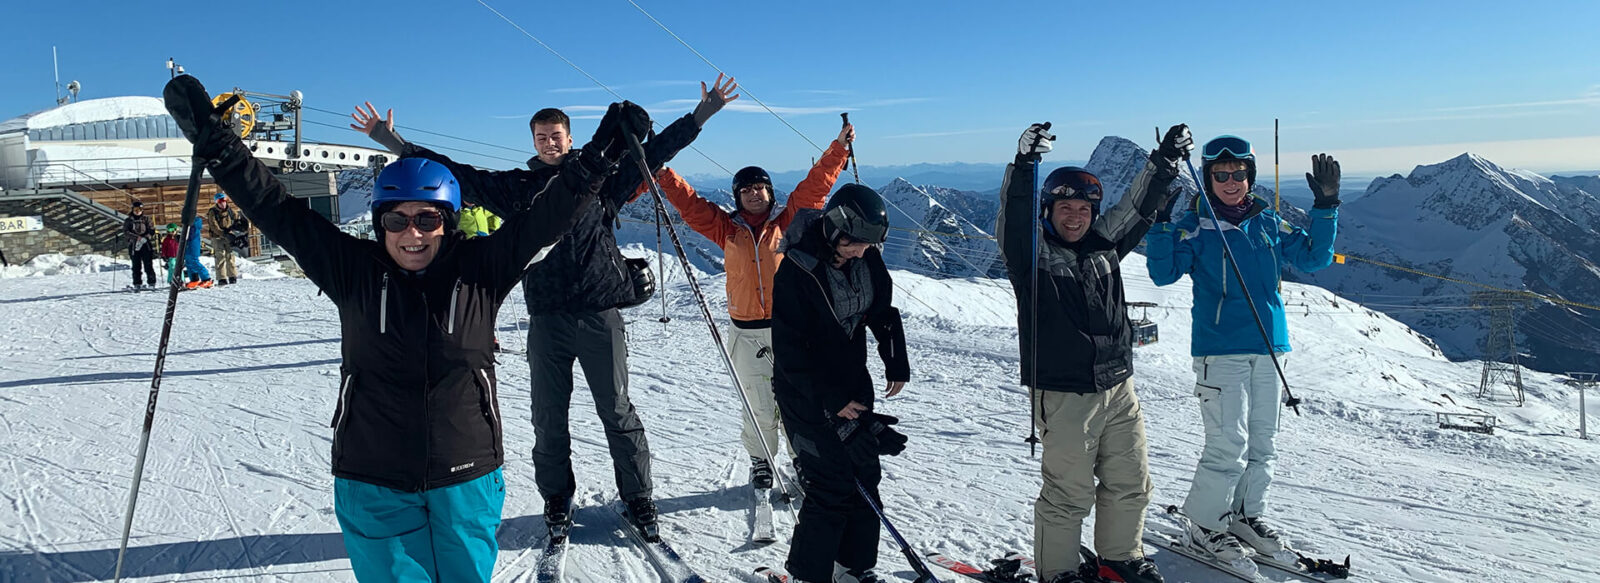 Active Away Skiing Group